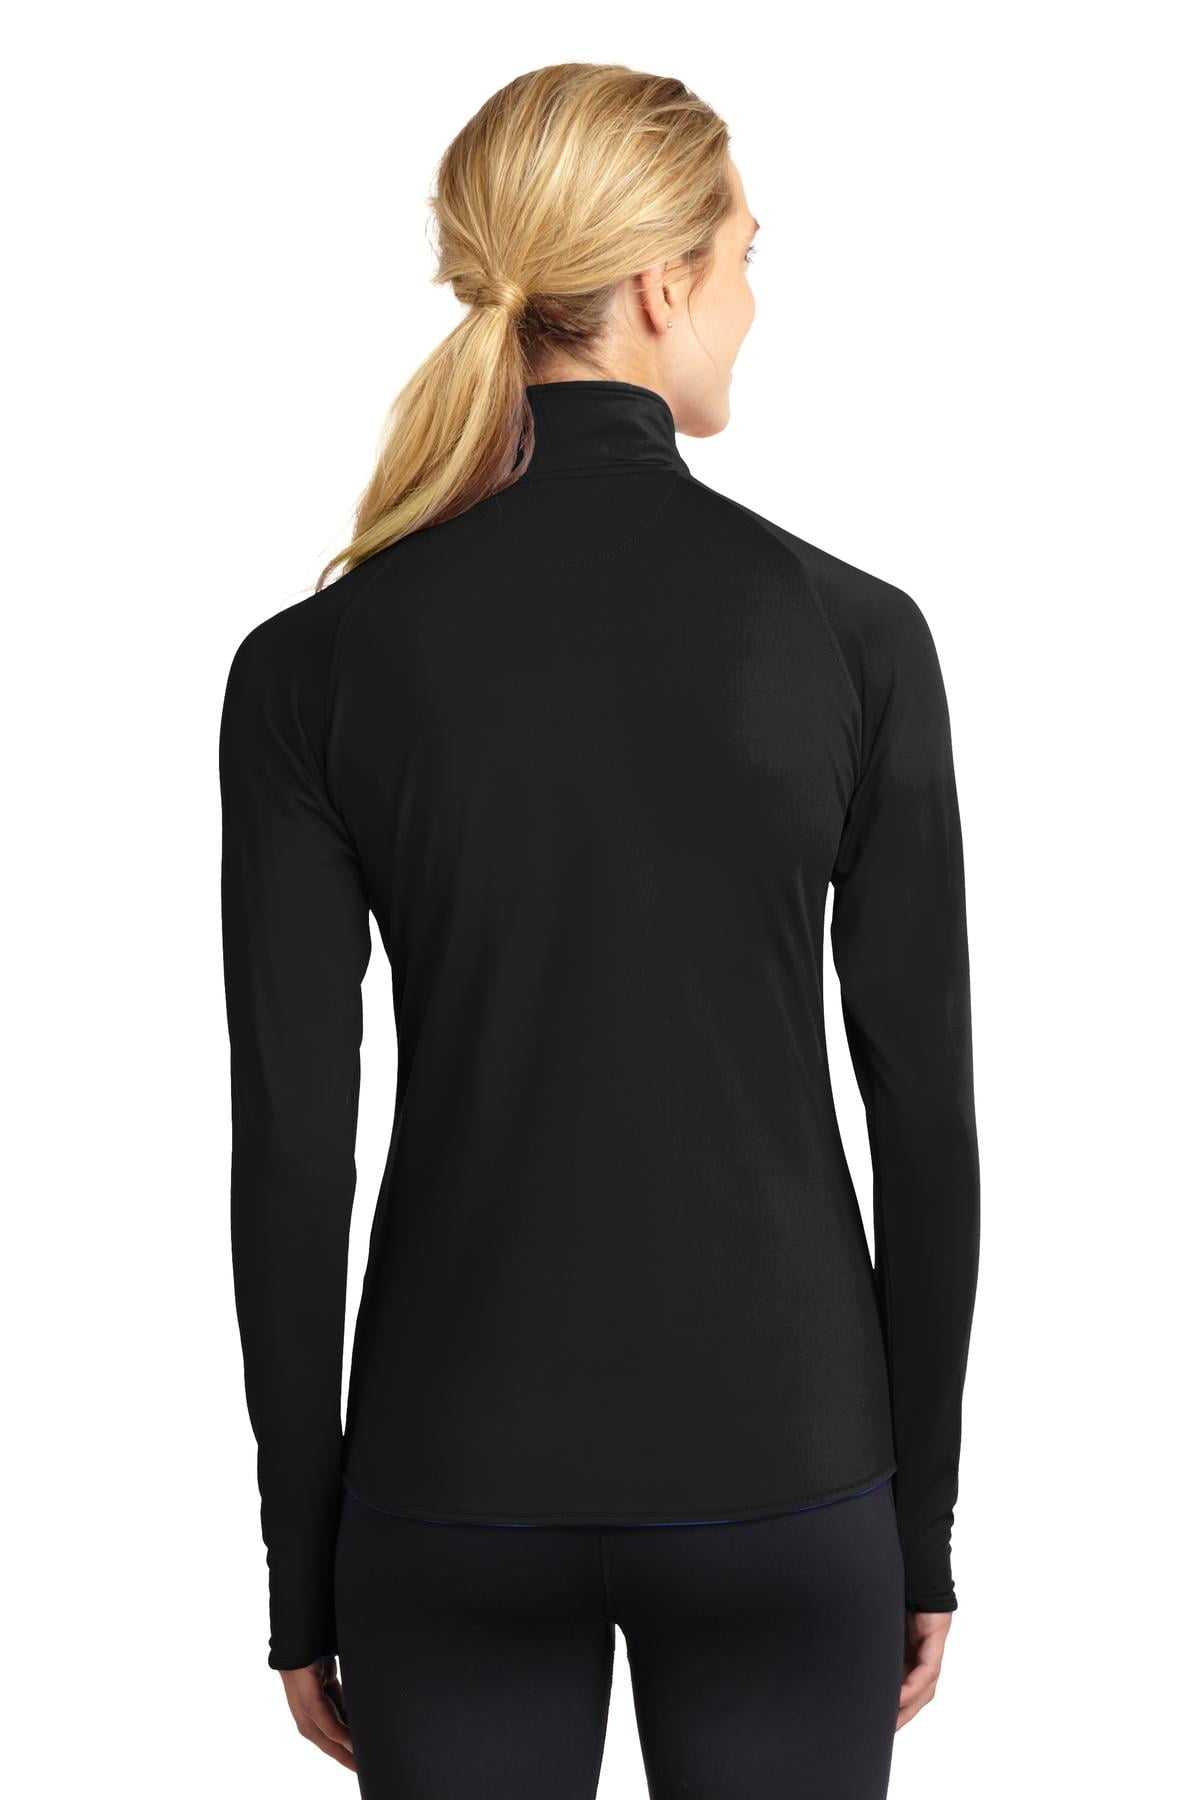 Ladies 1/2-Zip Stretch LST850 Sport-Wick ® Sport-Tek ® Pullover.